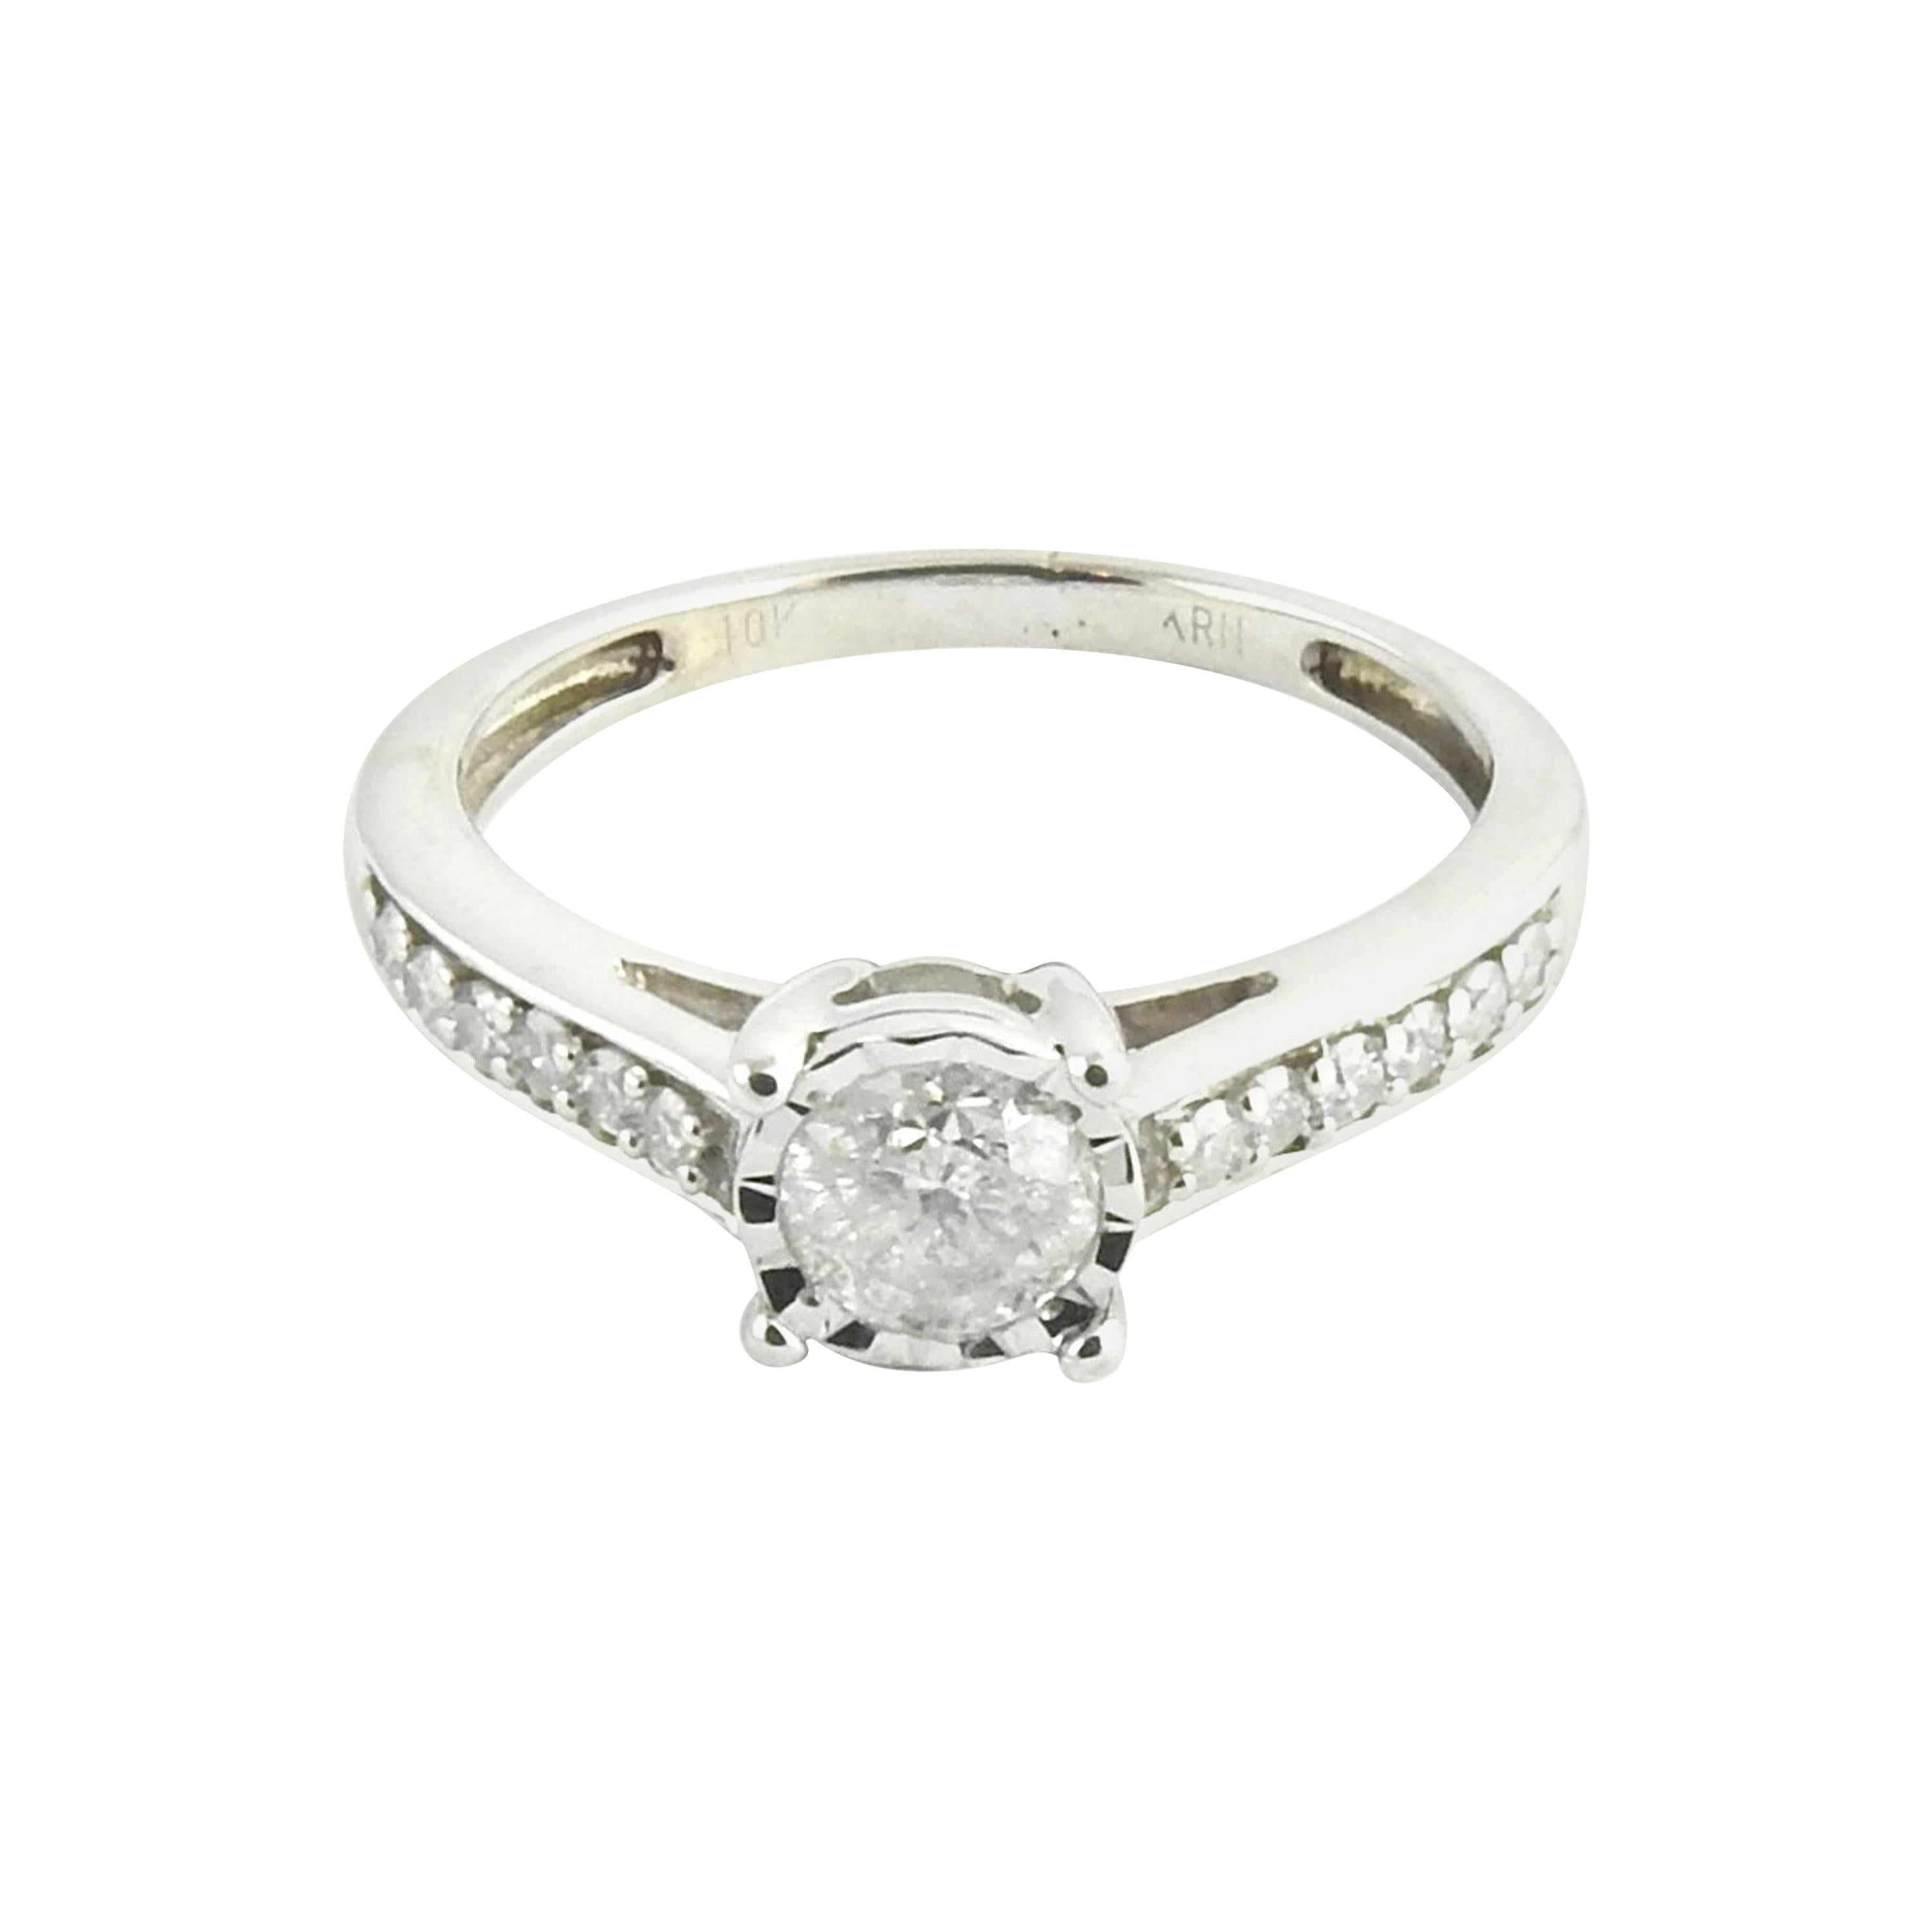 10 Karat White Gold and Diamond Engagement Ring